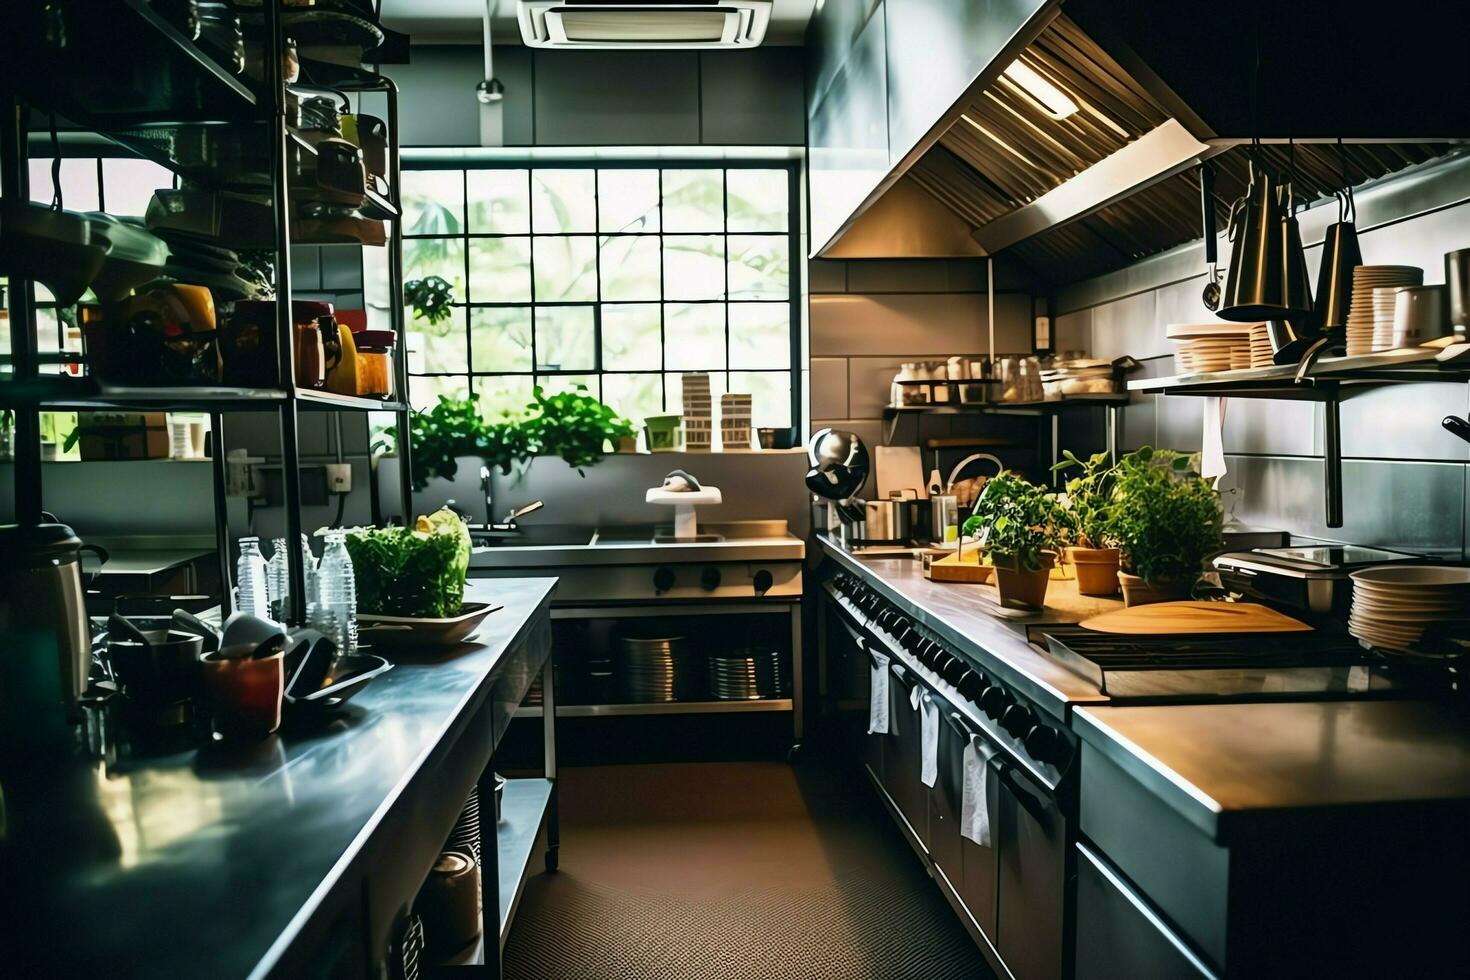 dentro limpiar cocina de un moderno restaurante o mini café con Cocinando utensilios y pequeño bar mostrador concepto por ai generado foto